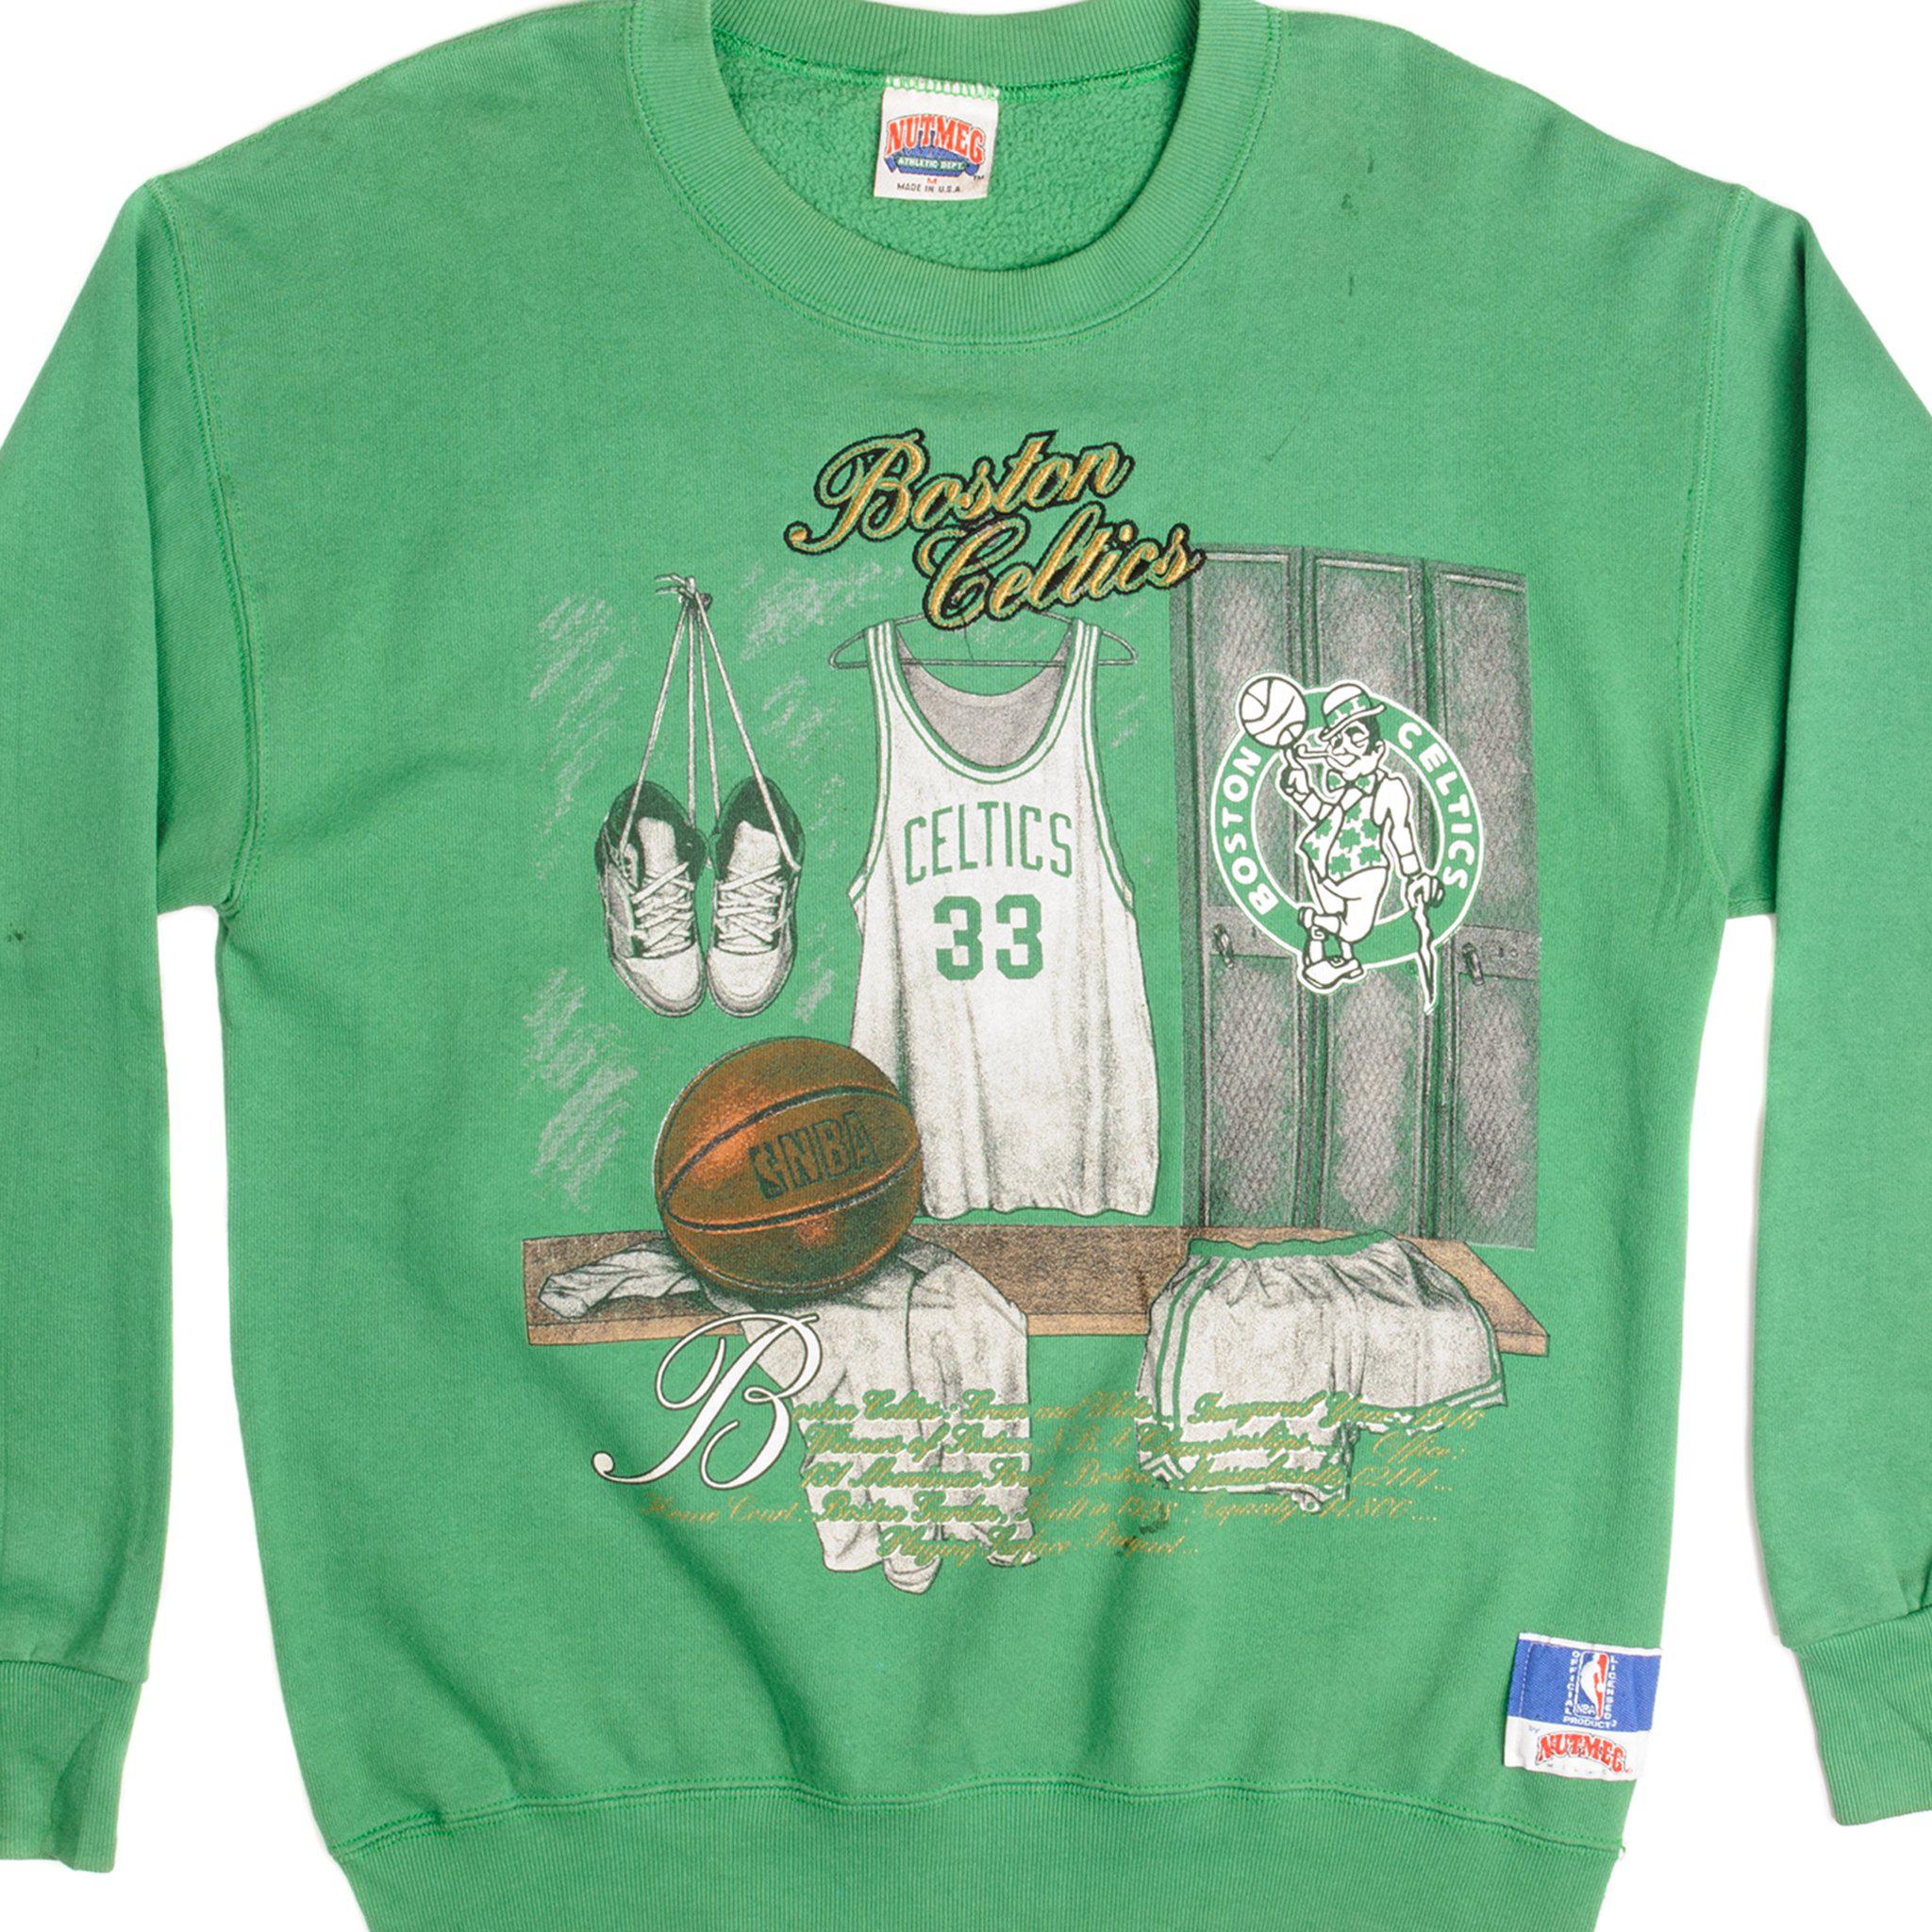 Vintage Boston Celtics Sweatshirt (1990s) 8613